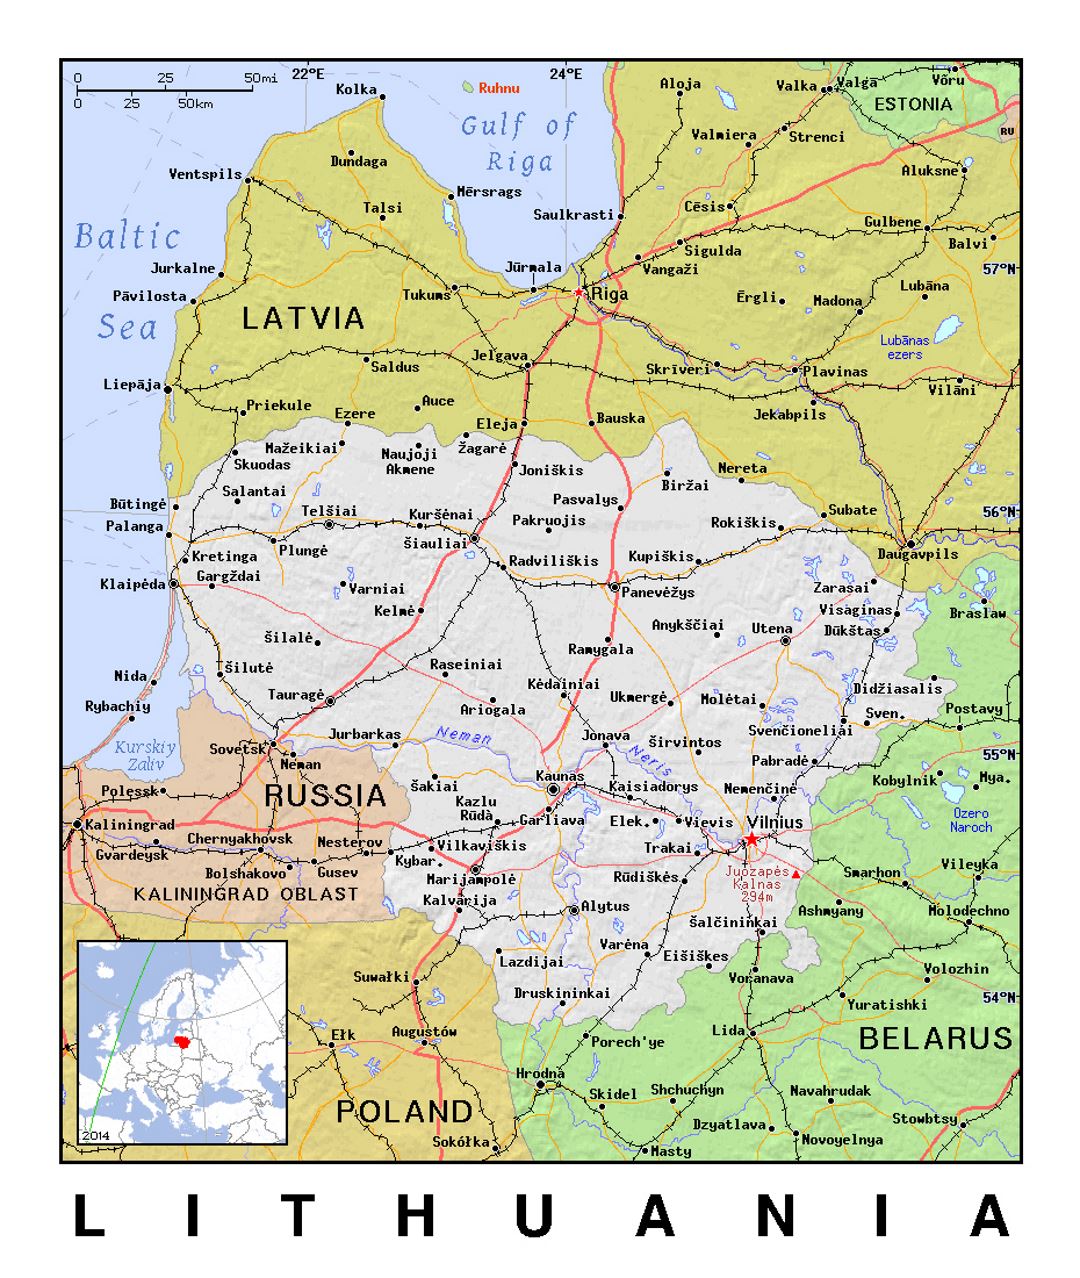 Detallado mapa político de Lituania con alivio